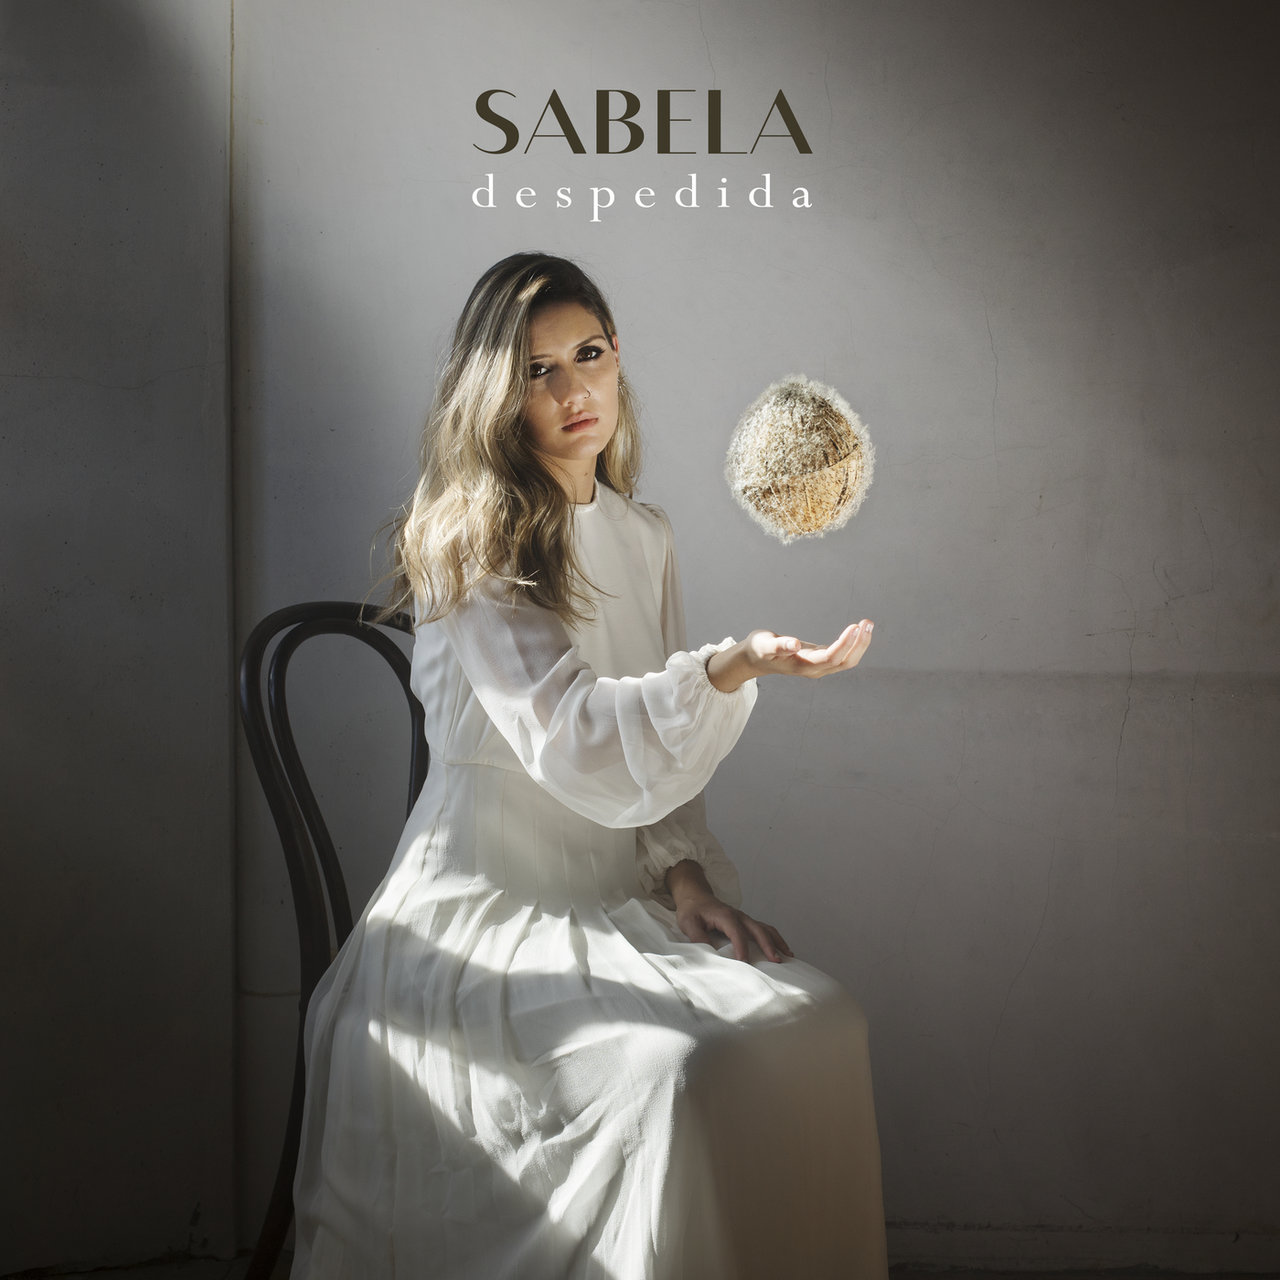 Sabela Despedida cover artwork